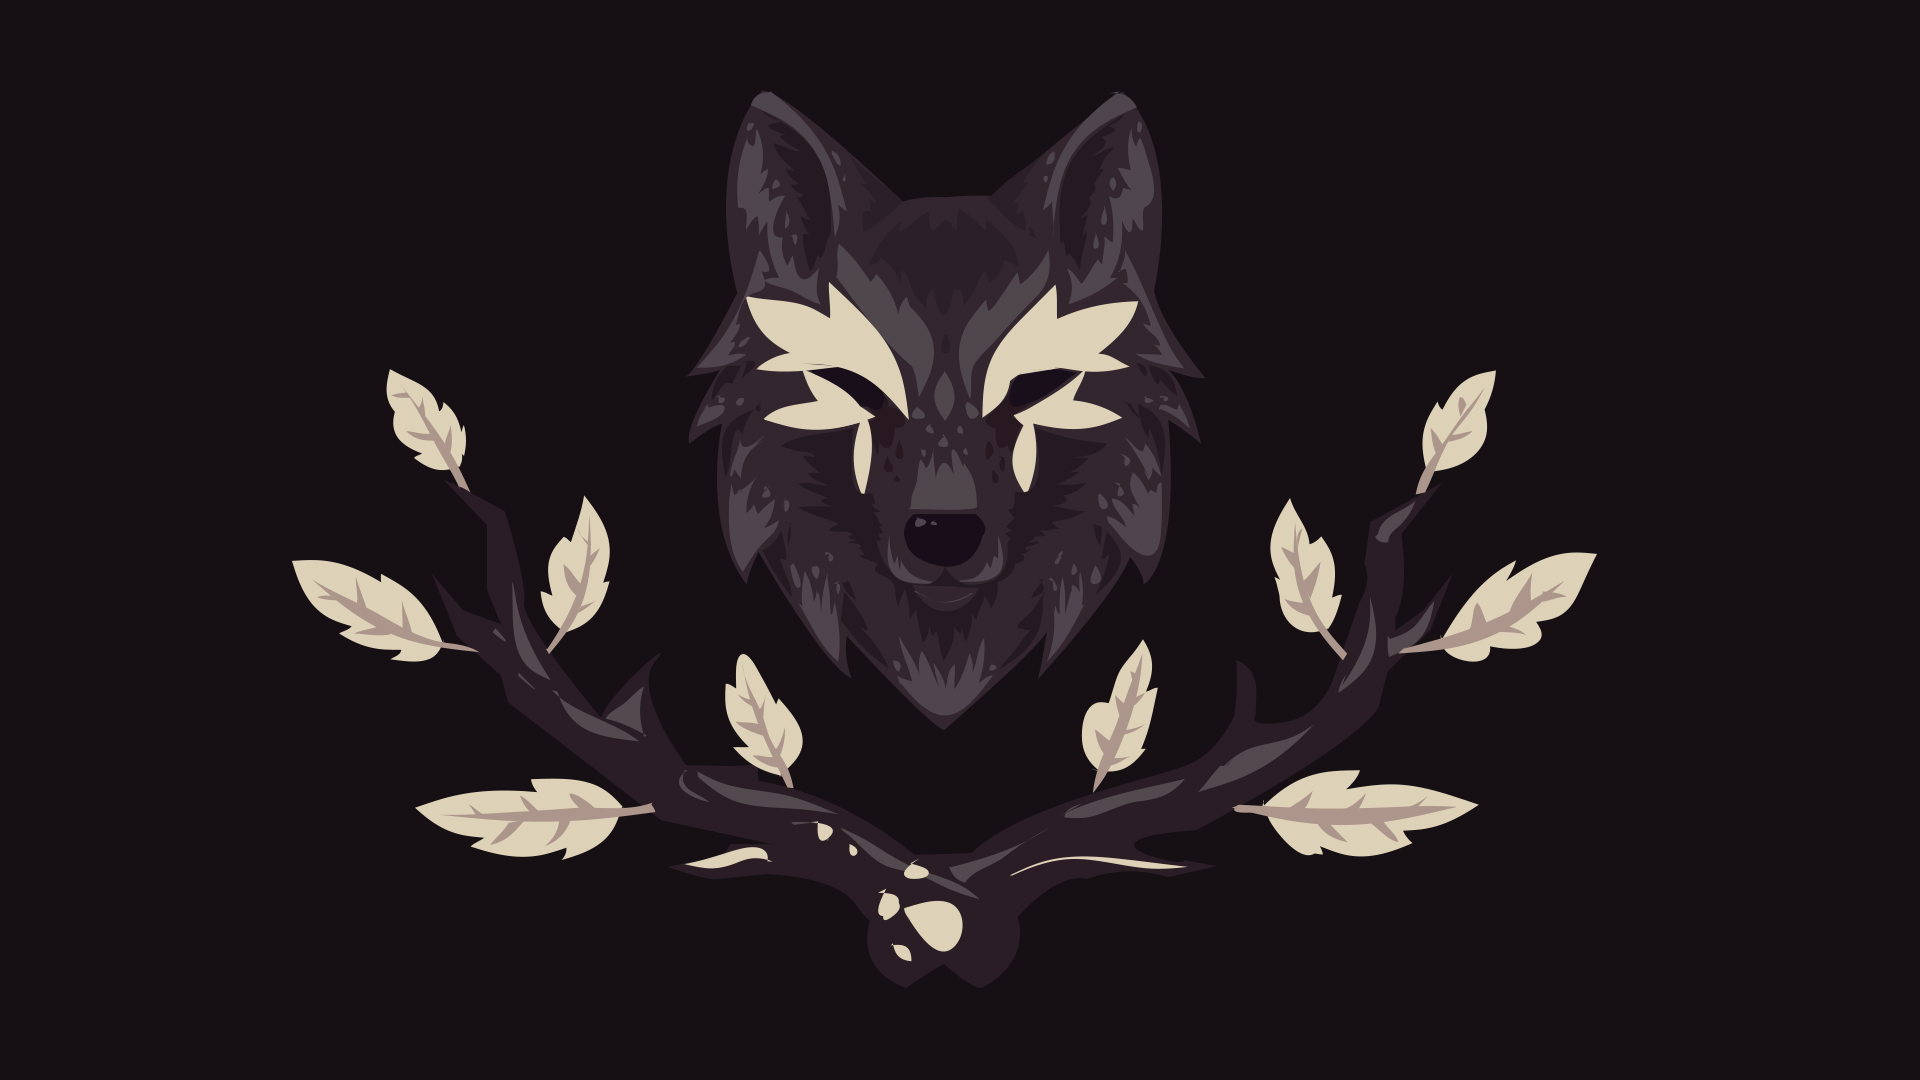 General 1920x1080 wolf artwork digital art fantasy art animals symmetry leaves simple background frontal view